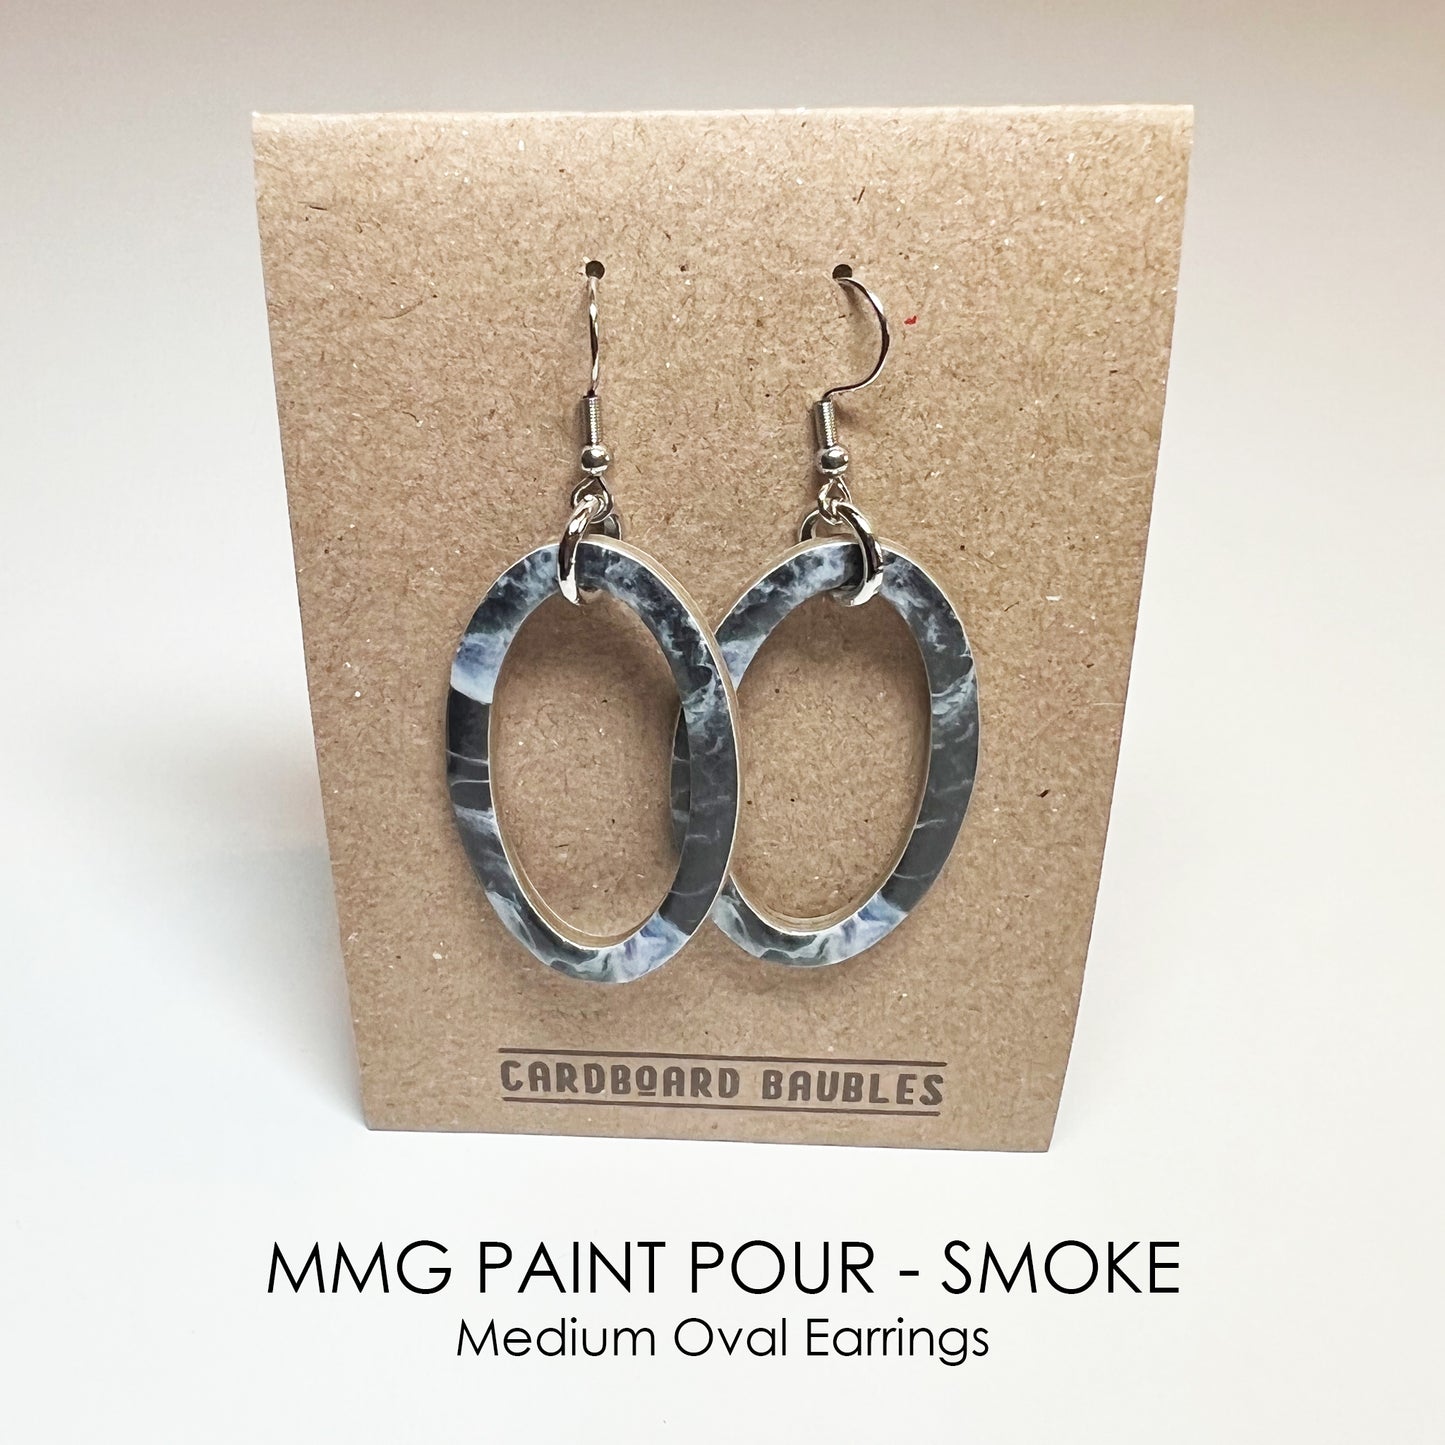 MMG PAINT POUR - SMOKE - Oval Cardboard Baubles Earrings